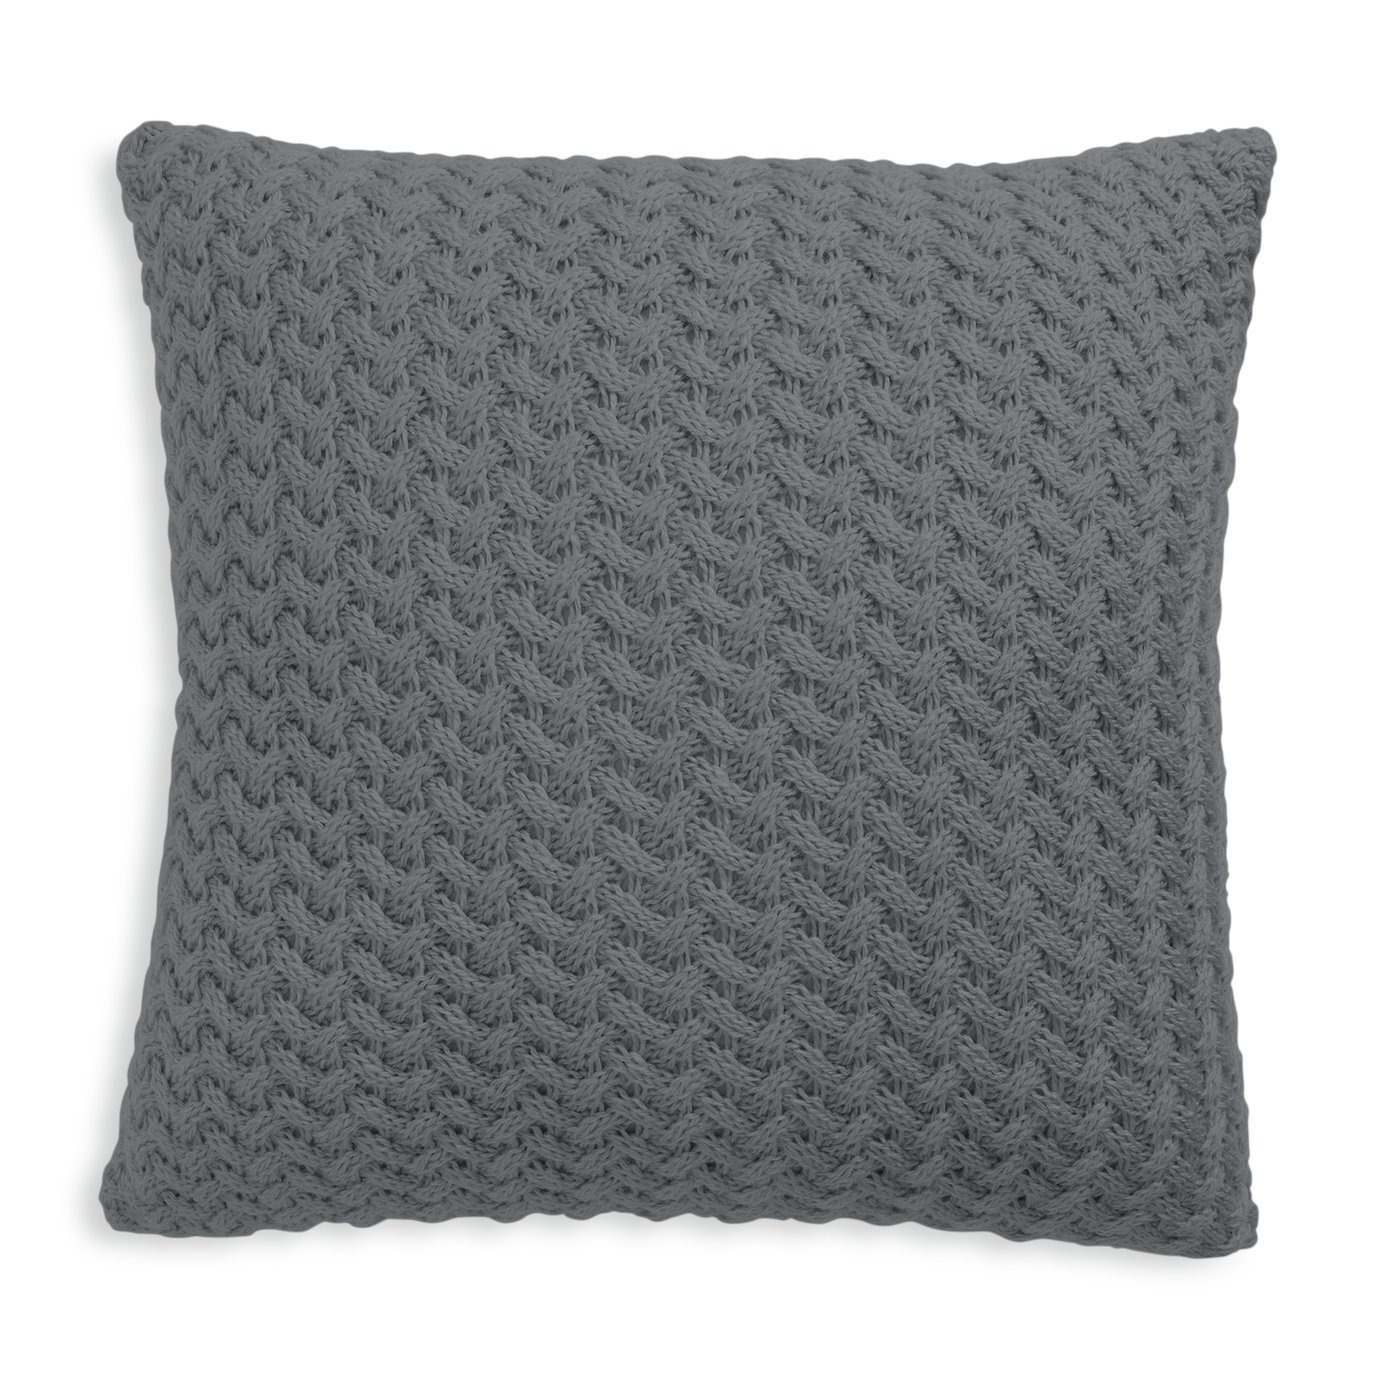 Habitat Plain Knitted Cushion - Charcoal - 50x50cm - image 1